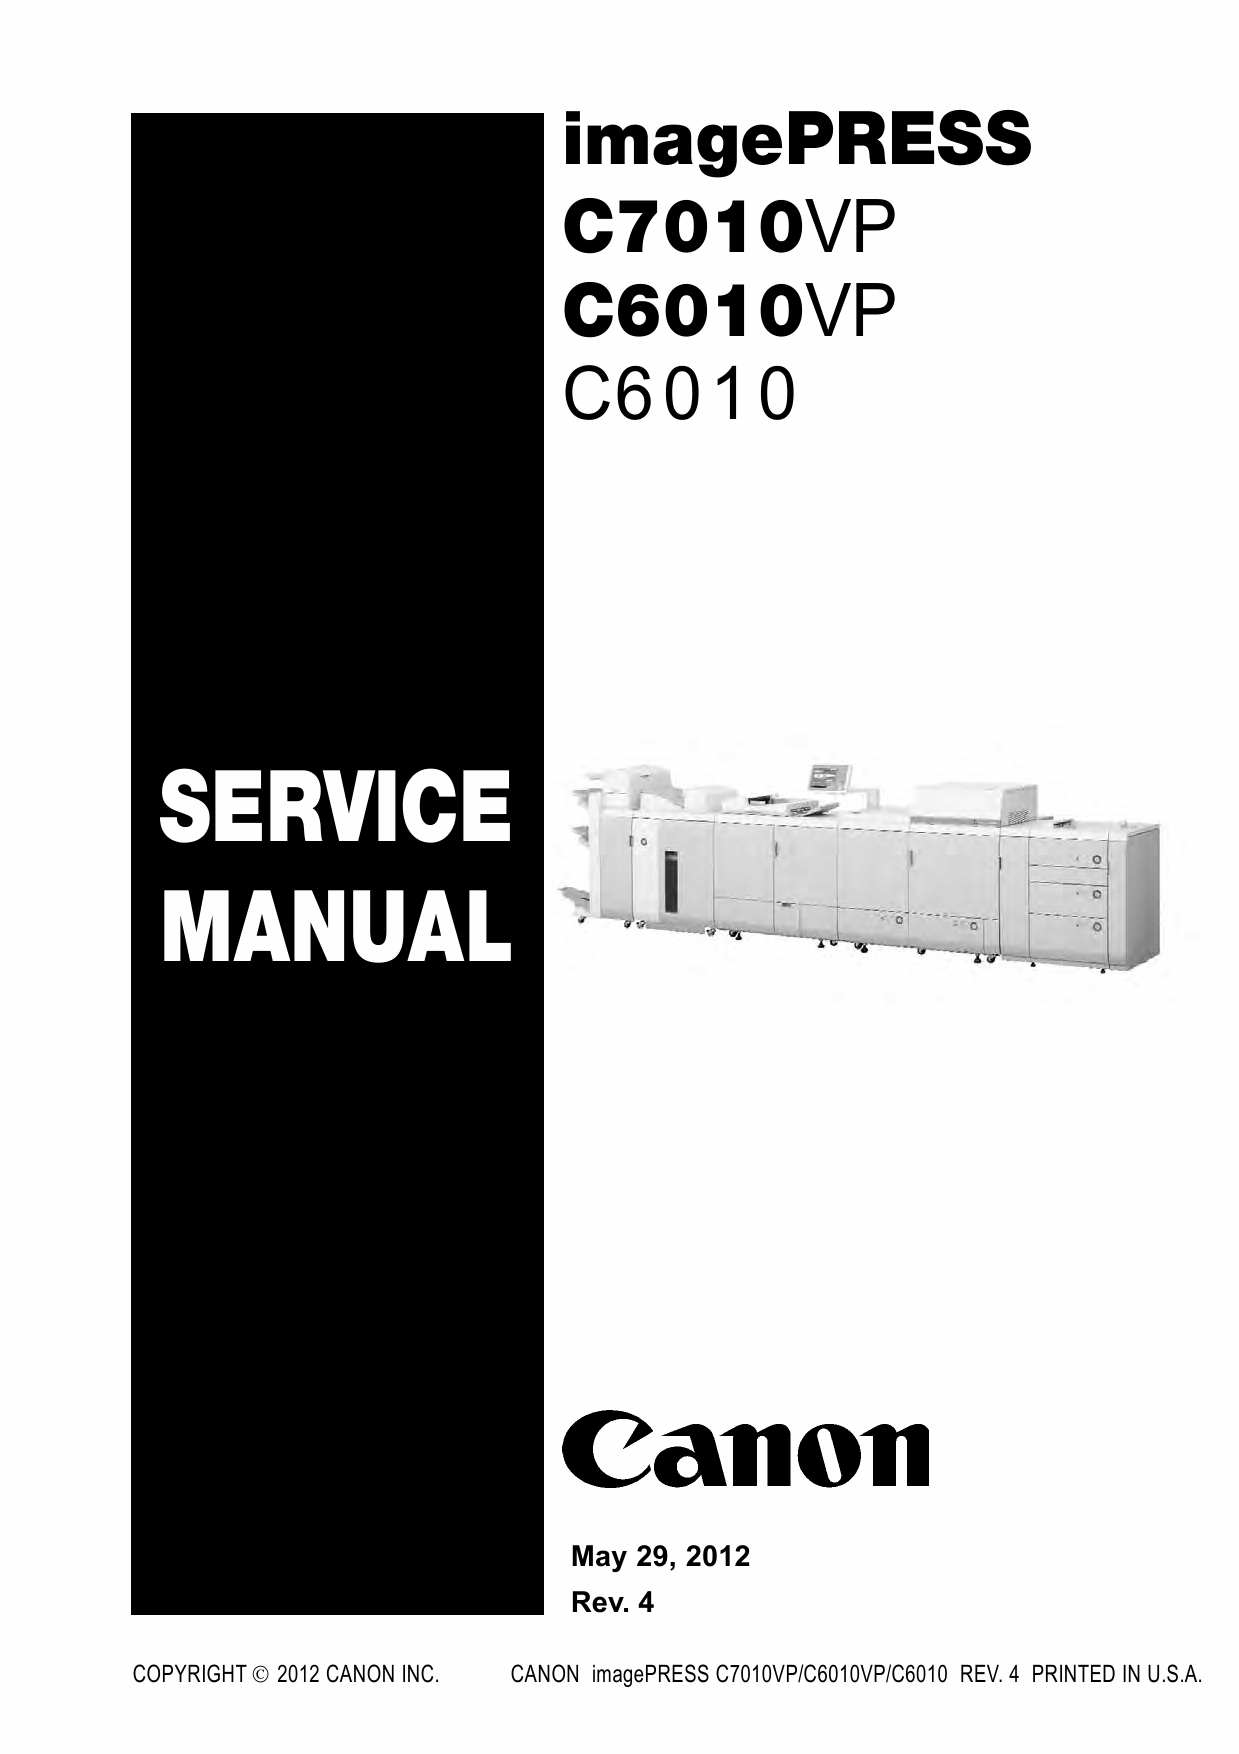 CANON imagePRESS C6010 C6010VP C7010VP Service Manual PDF download-1